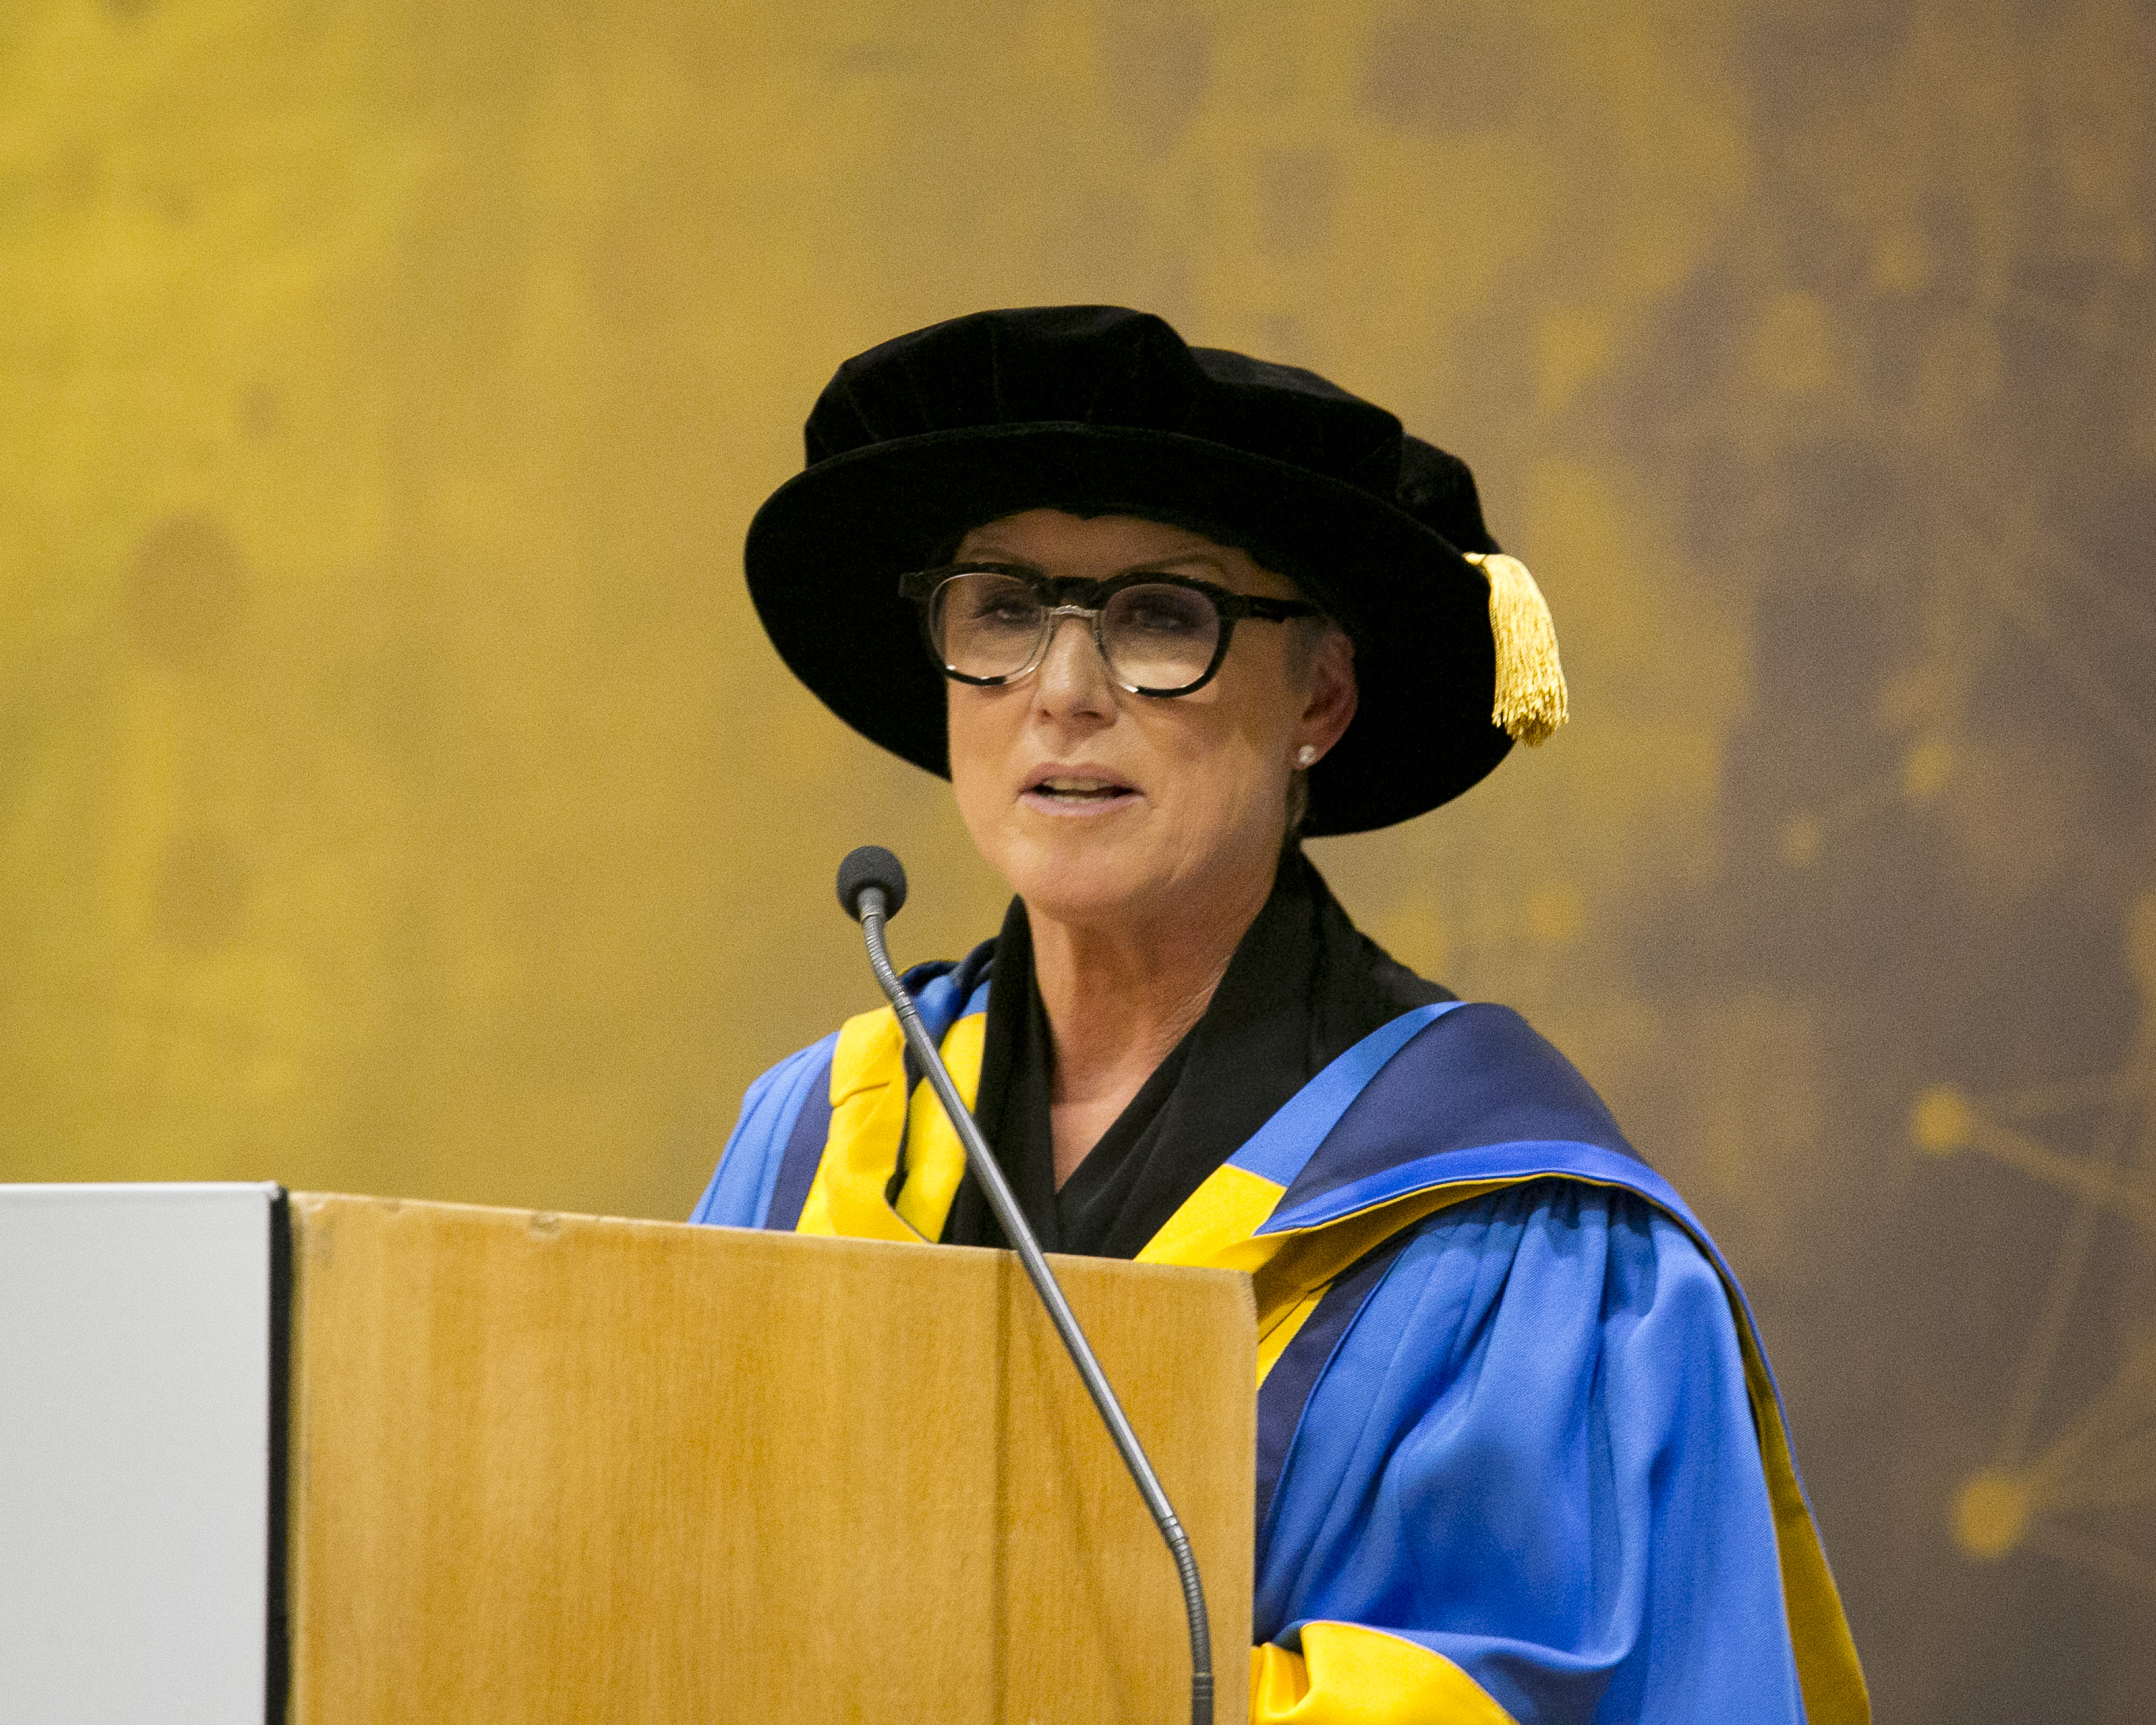 A photo of Moya Doherty speaking